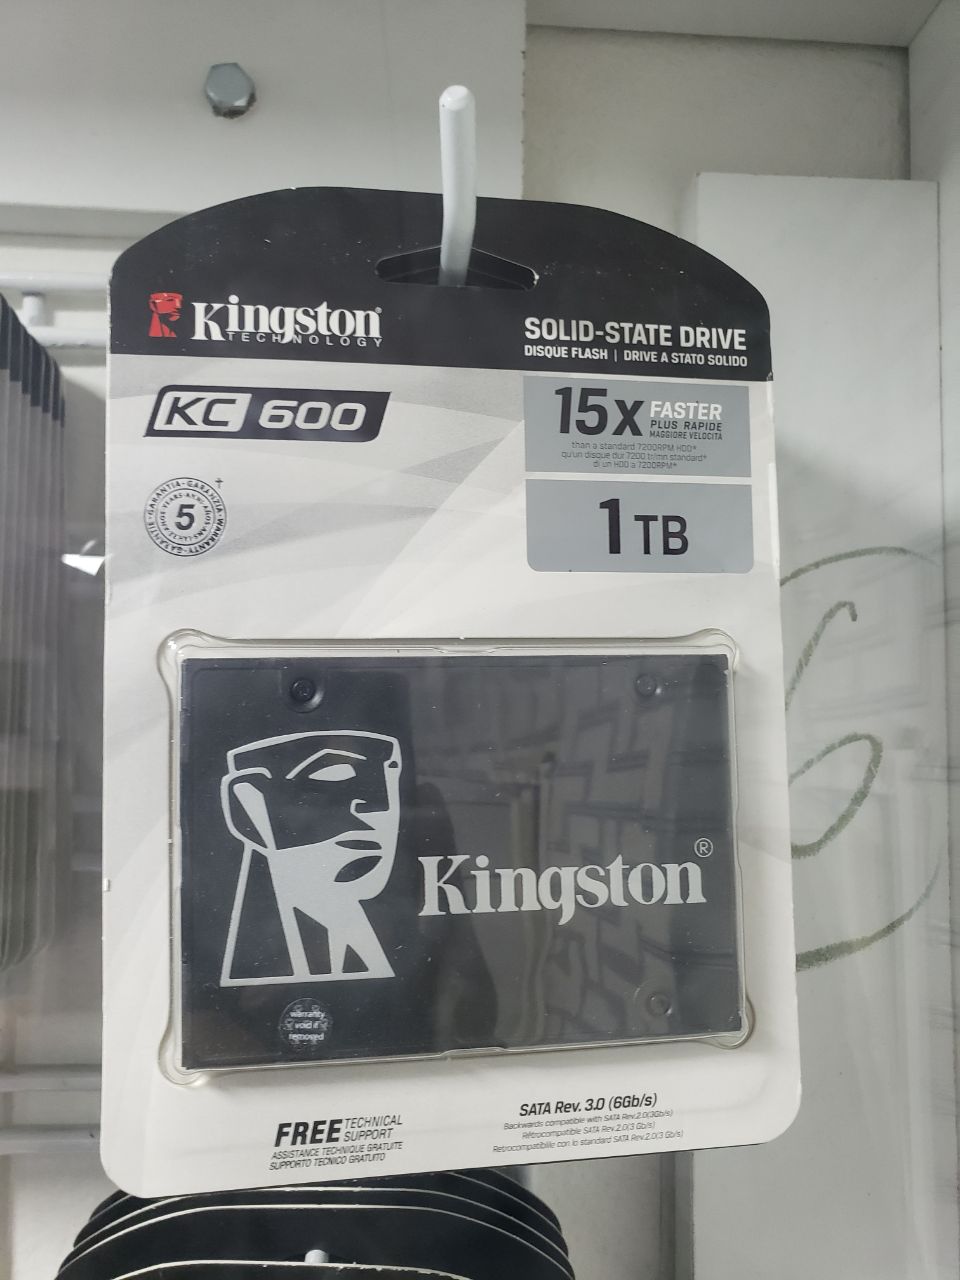 DISCO SSD 1TB KINGSTON KC600 EN ESPECIAL LEER DESCRIPCION Foto 7169950-1.jpg